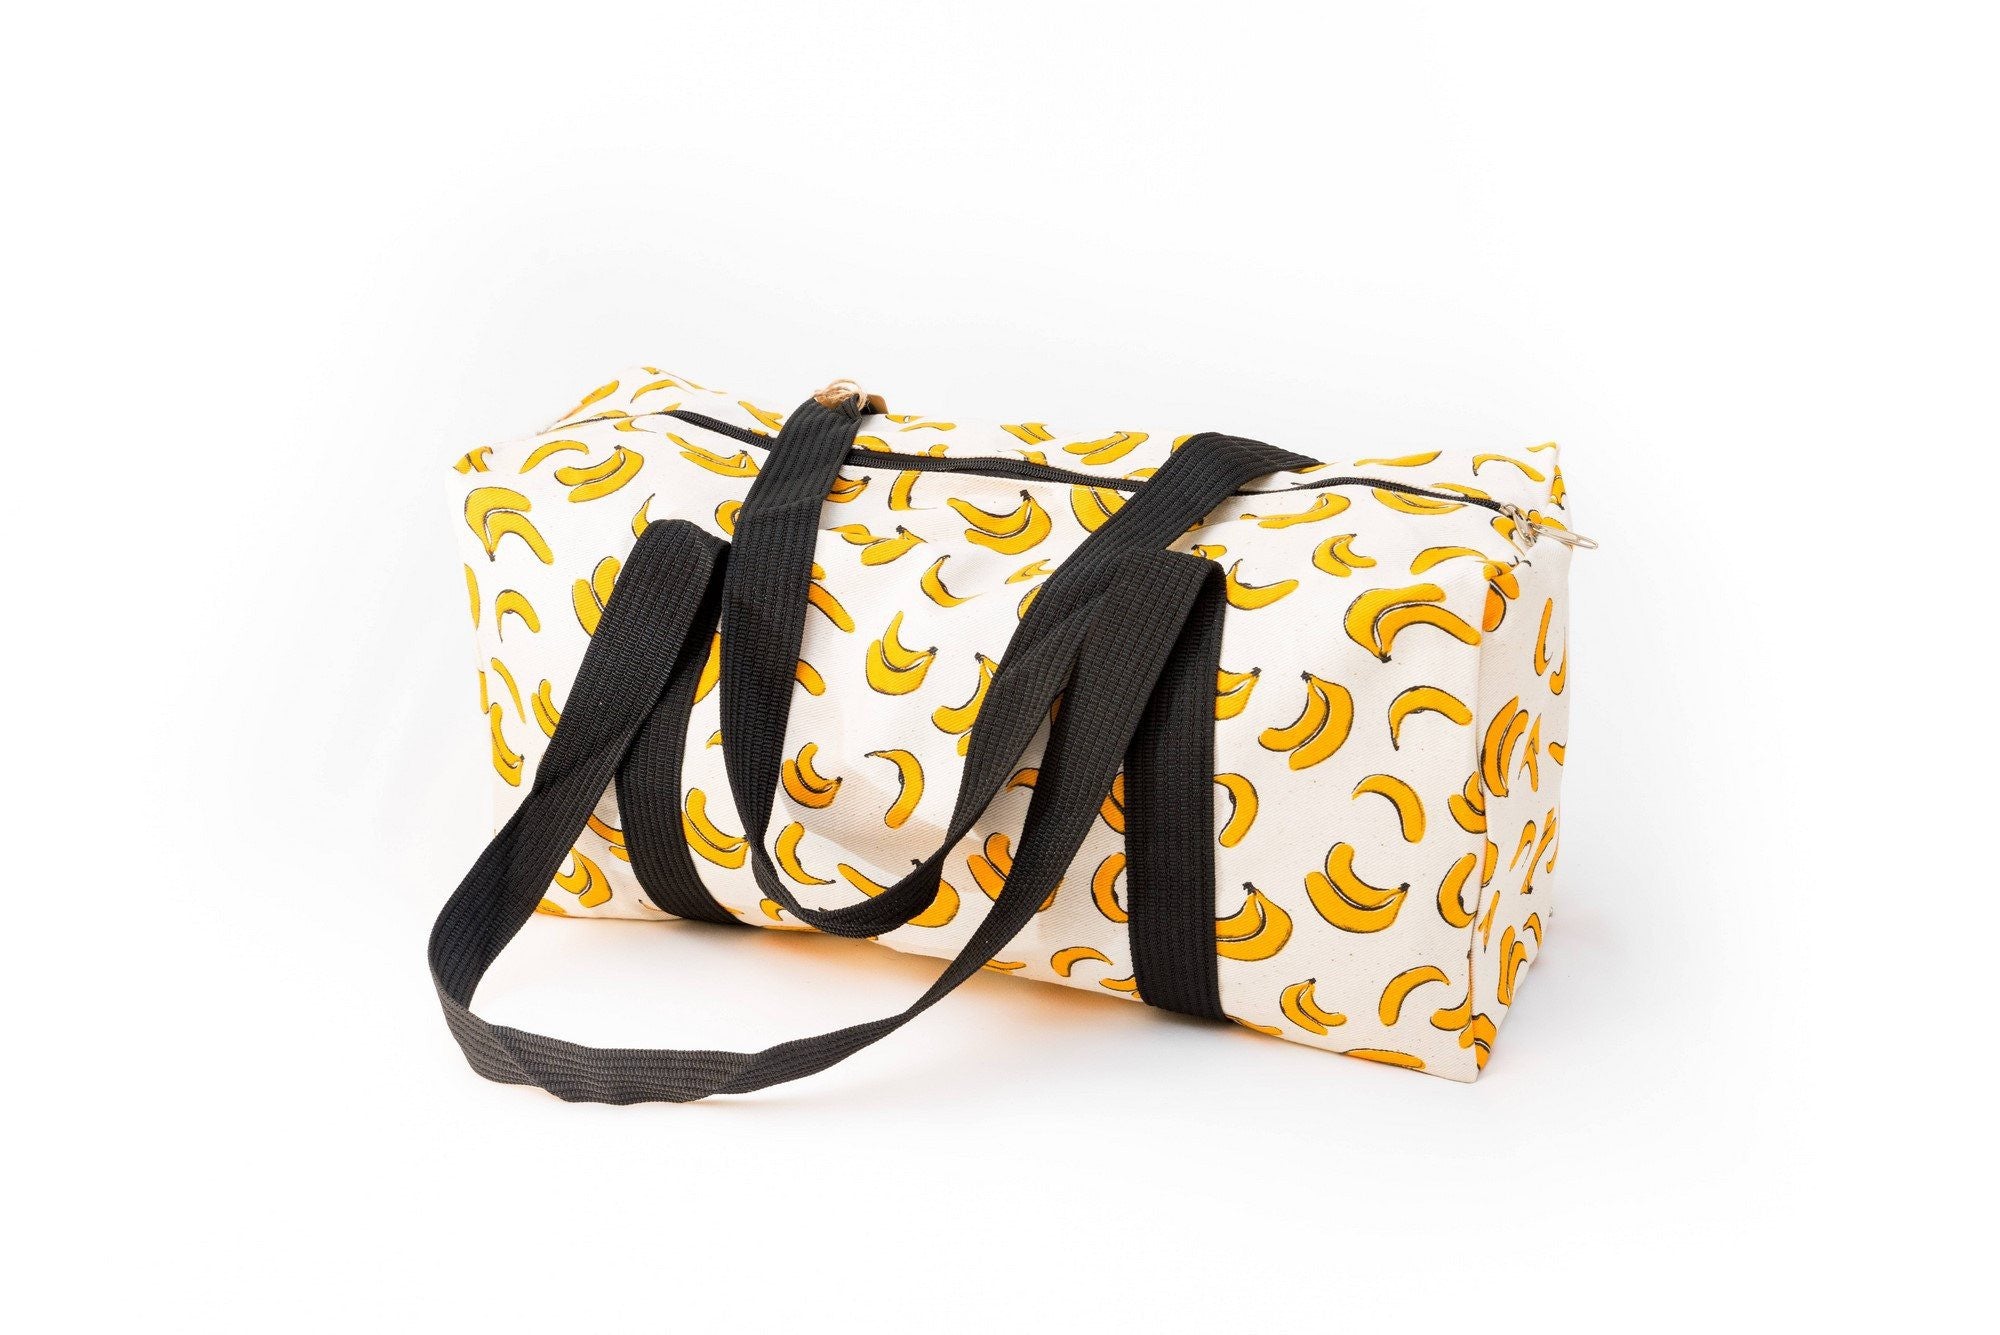 Canvas Duffel Bag - Canvas Duffel Bag - Gym Or Sports Bag, Carry-On Travel Luggage By Lemur Bags (Bananas)